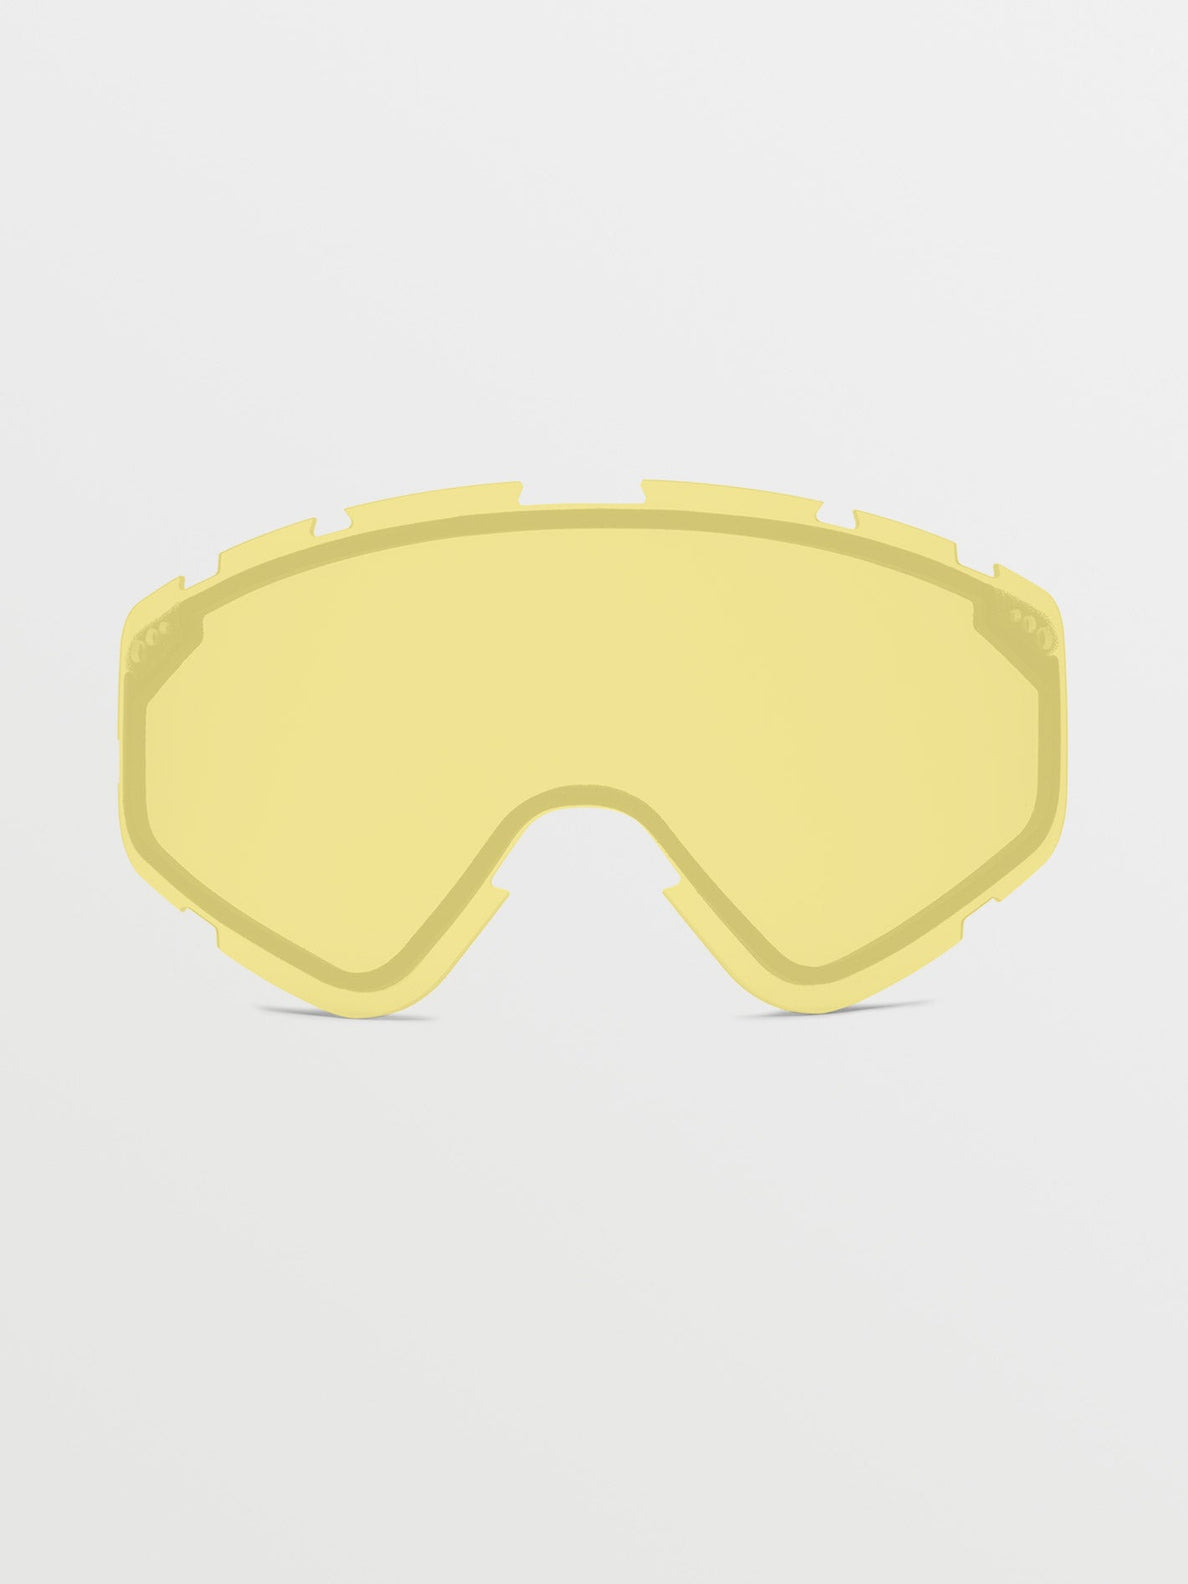 Attunga Khakiest/Sand Goggle (+ Bonus Lens - Yellow) - PINK CHROME (VG0823507_PICH) [3]